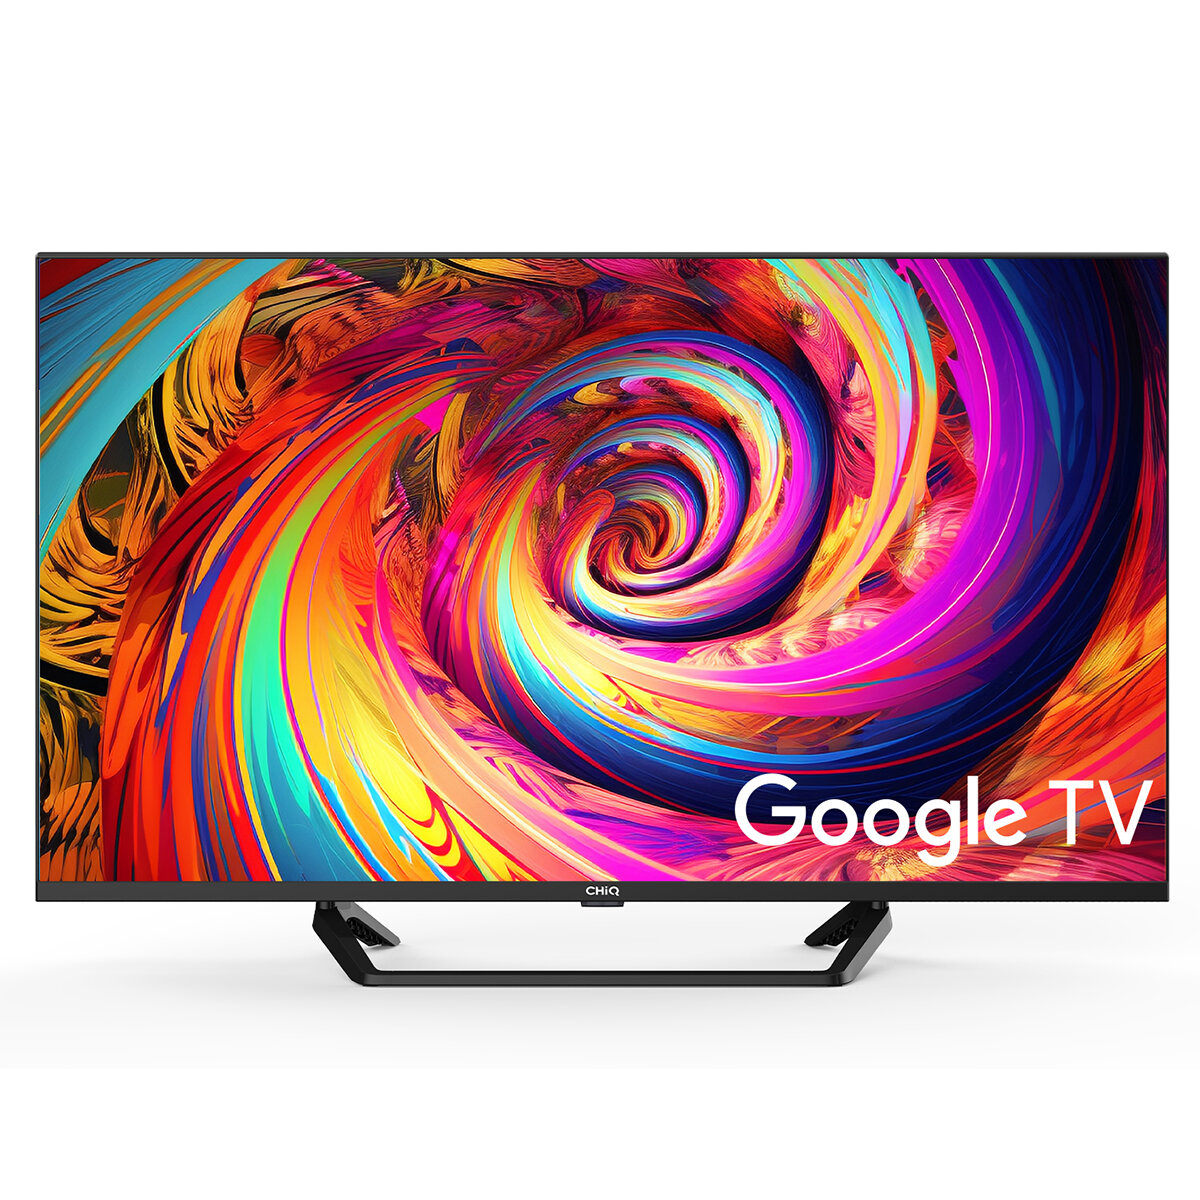 CHiQ Smart TV L40H7G 40 pouces Full HD 1080P Slim-Design Google TV